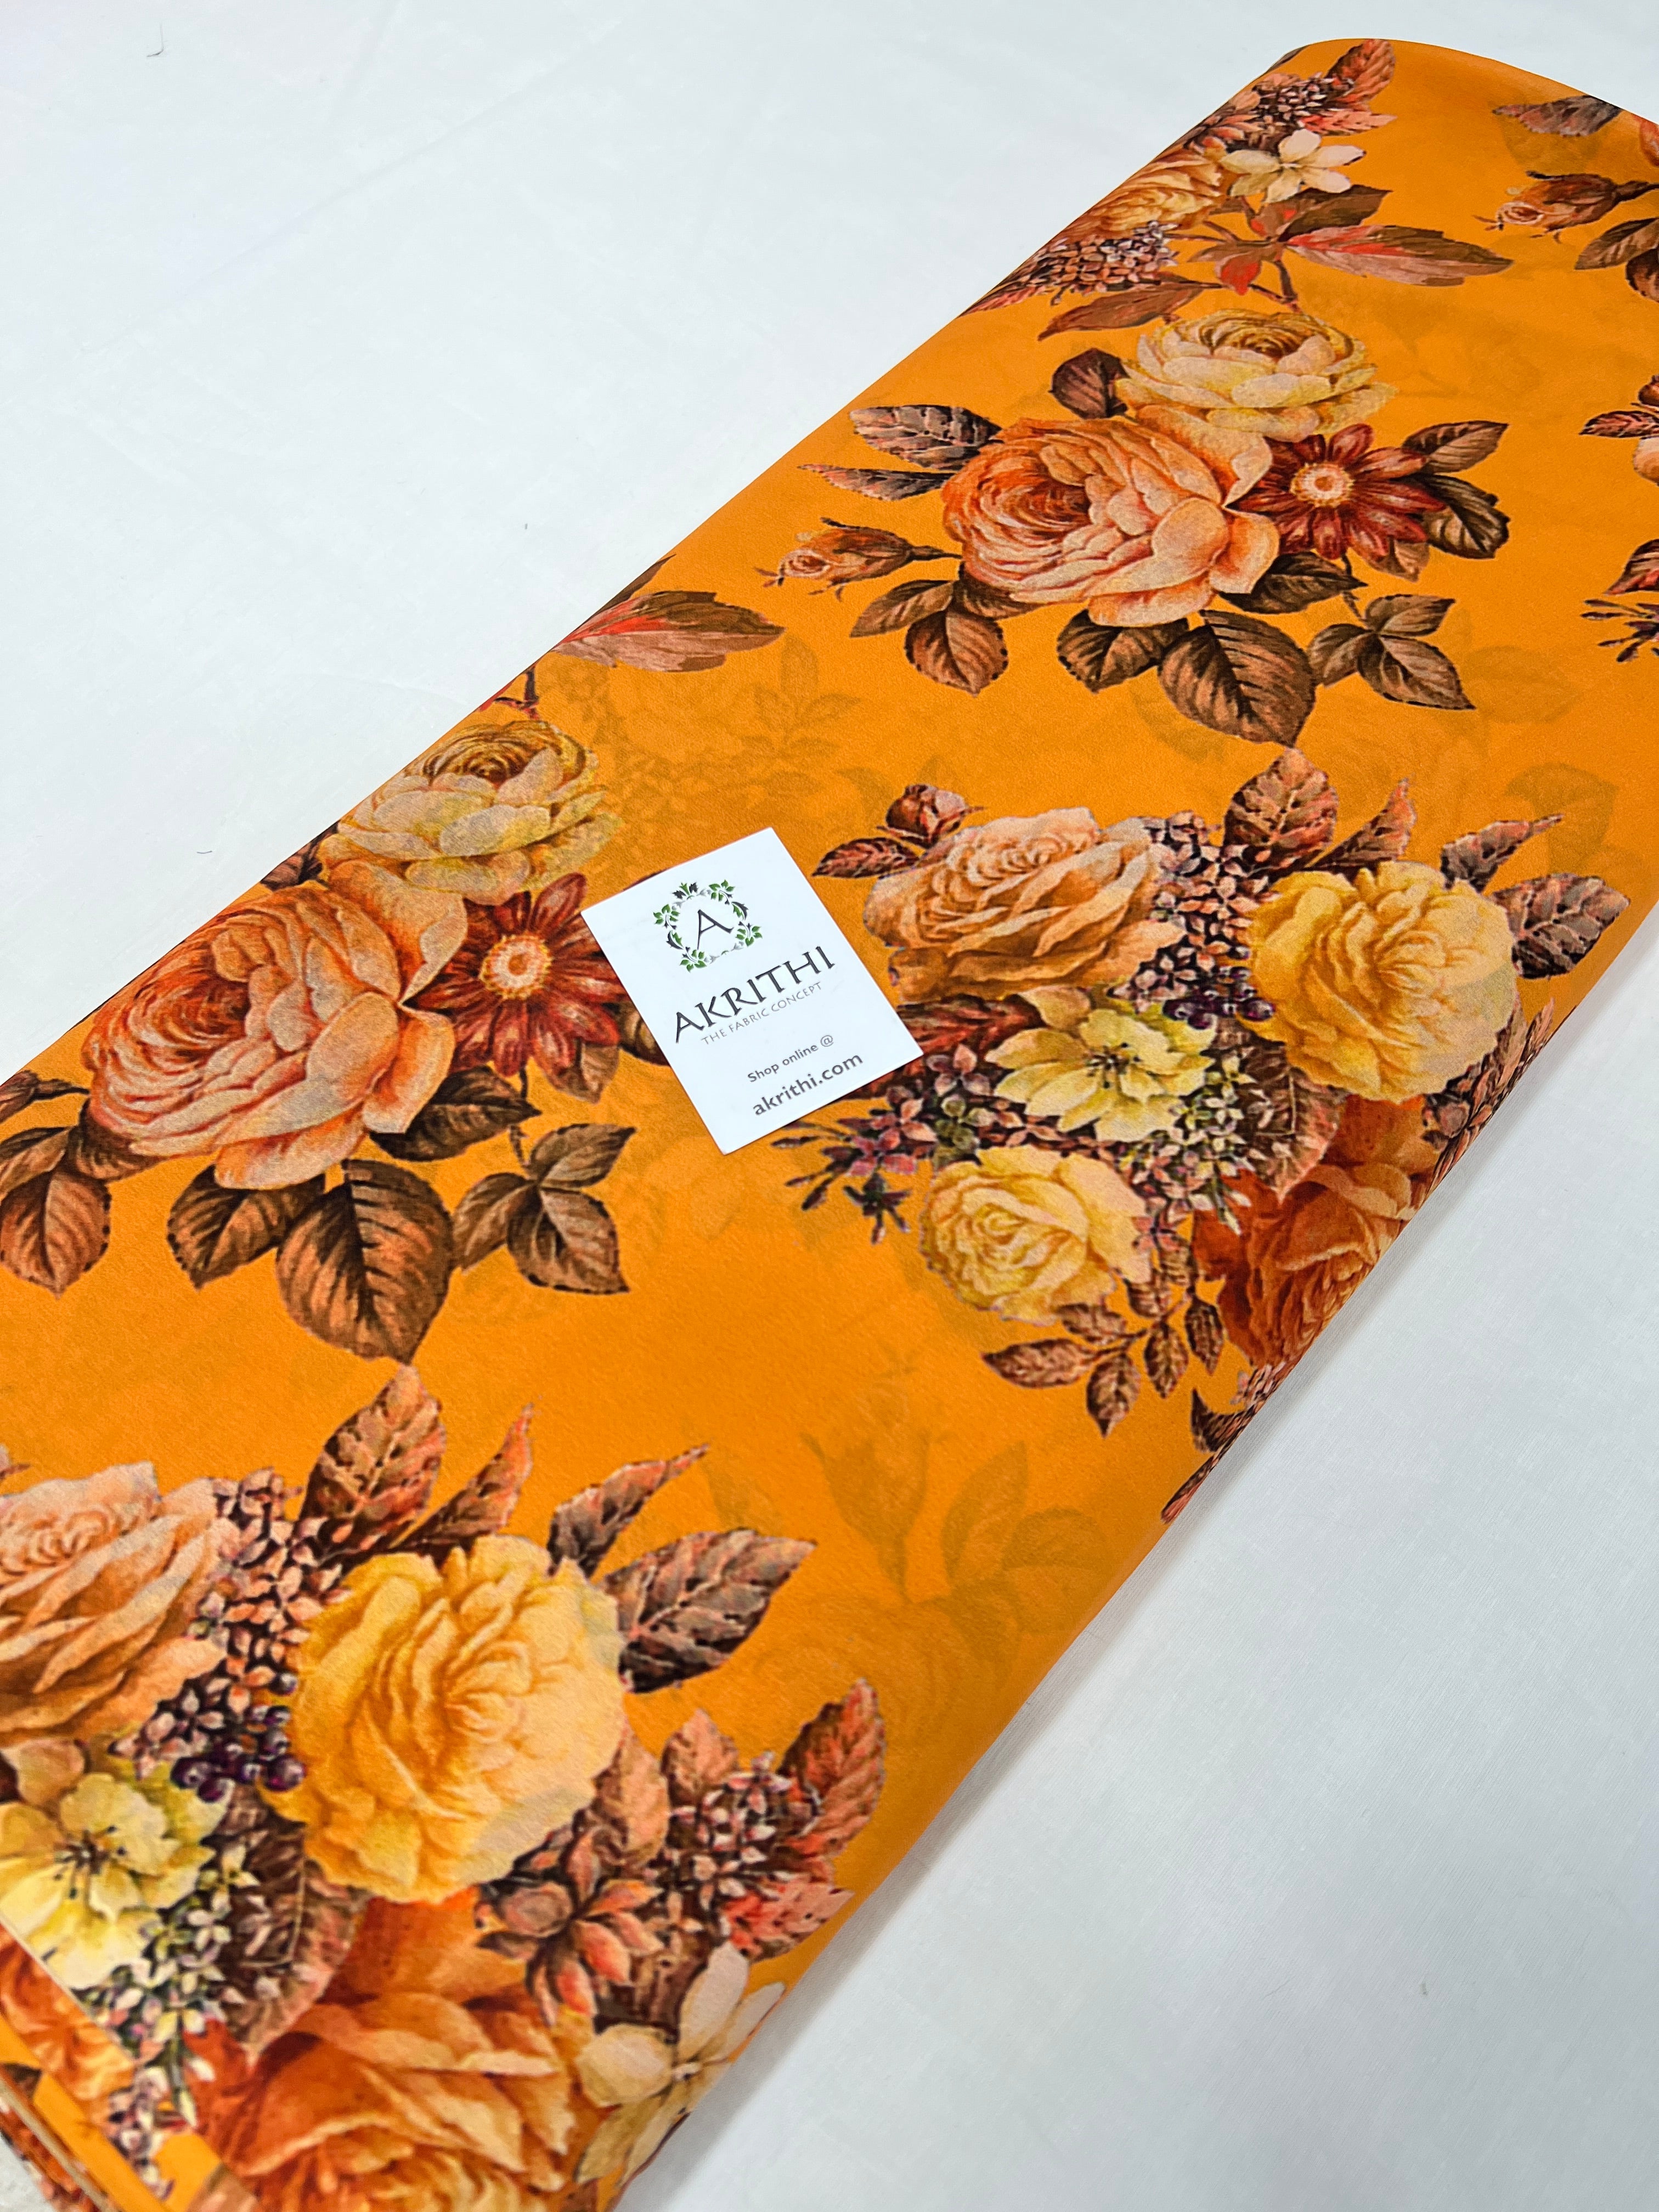 Buy printed georgette fabric online : printed fabrics online – Akrithi